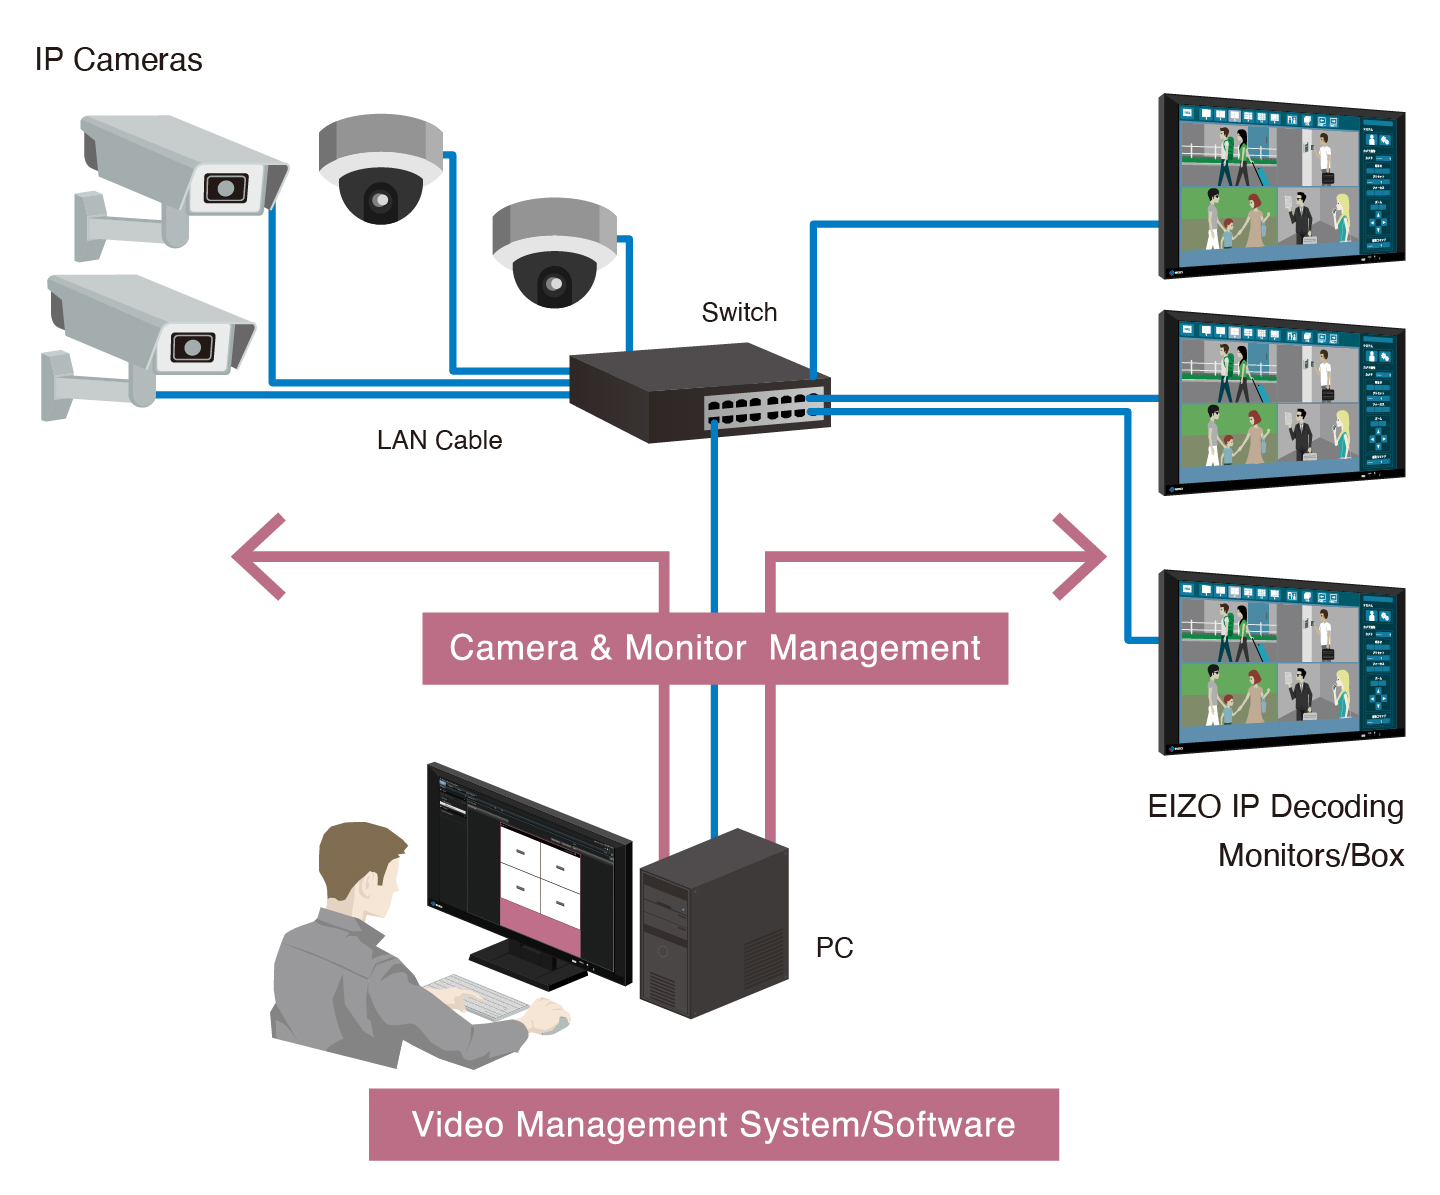 Video Management System/Software